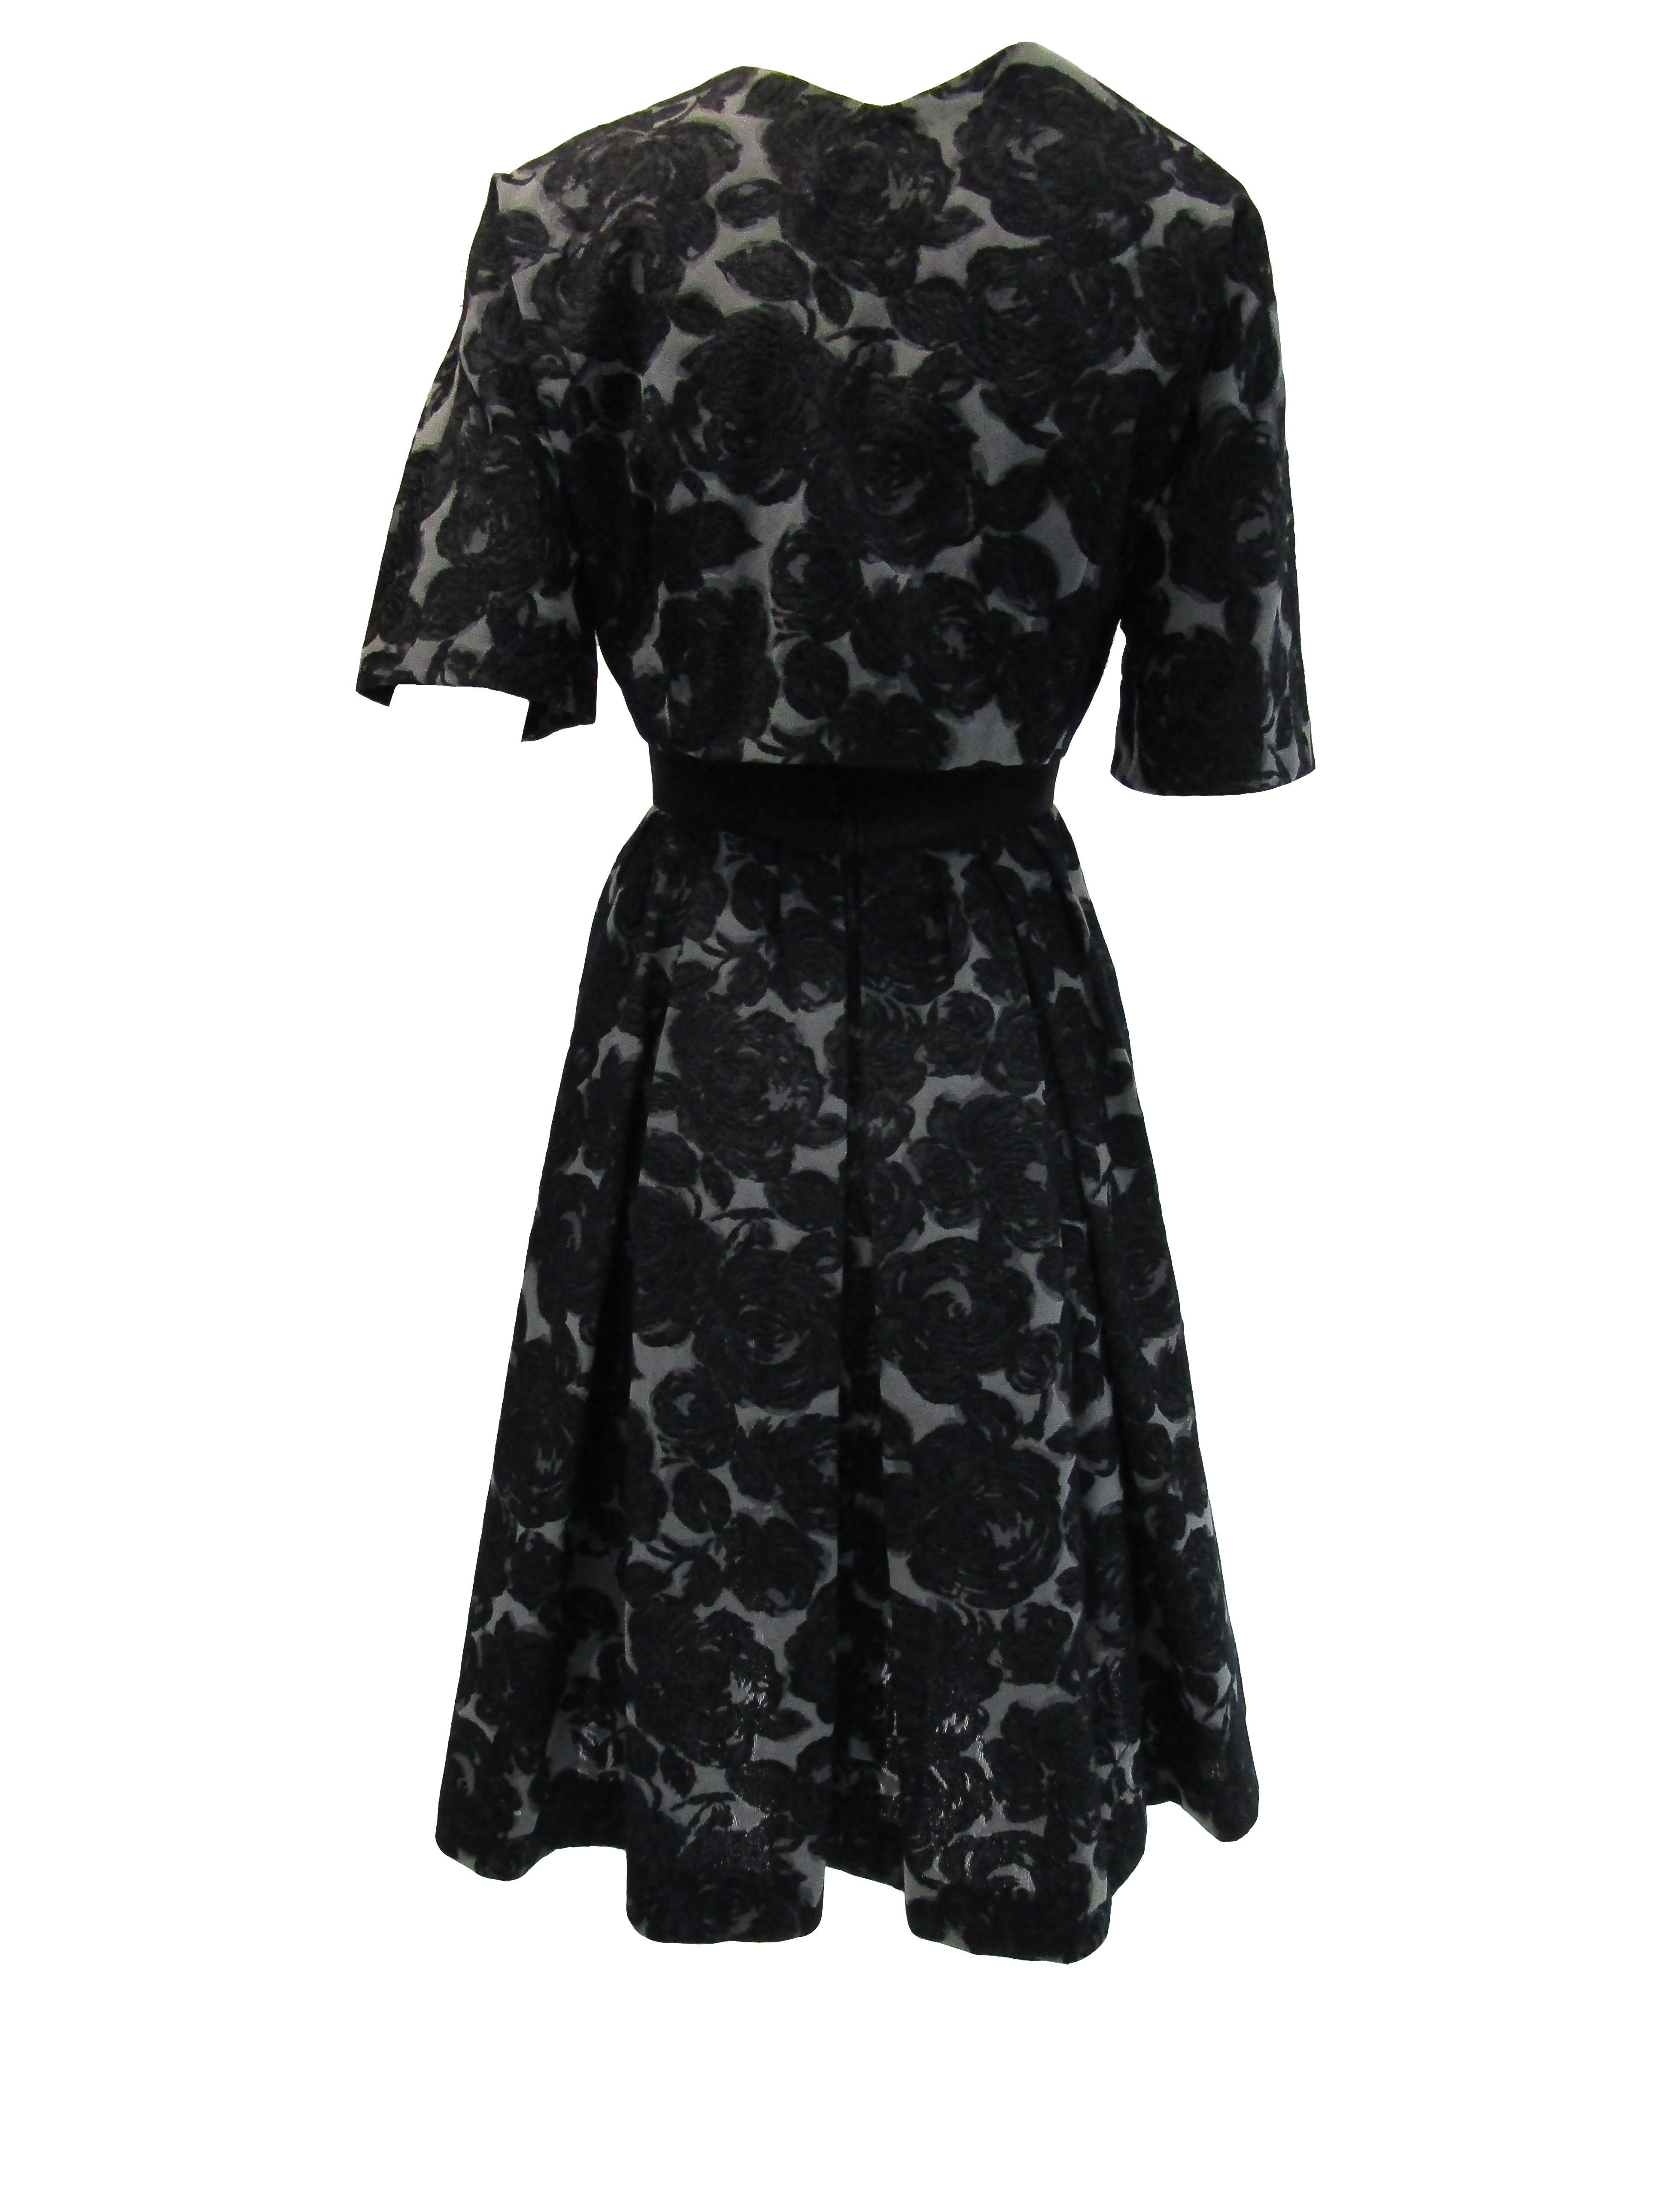 Rare 1950s Madame Gres licensed Black & Grey Embroidered Dress w/ Bolero Jacket For Sale 5